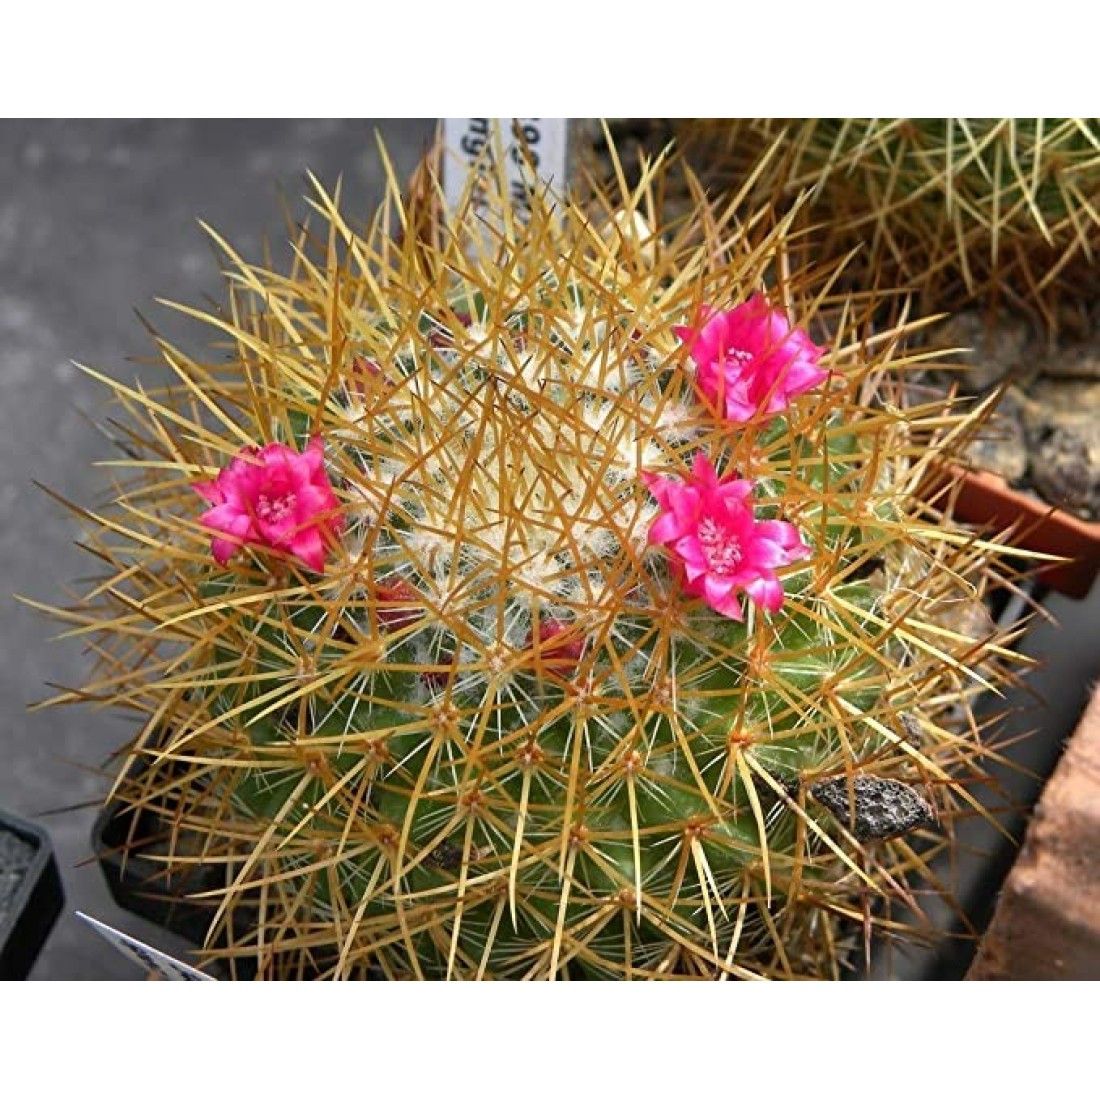 Mammillaria Rhodantha PRINGLEI(lemon ball) cactus live plant ( size 3 inches) flowering size 2